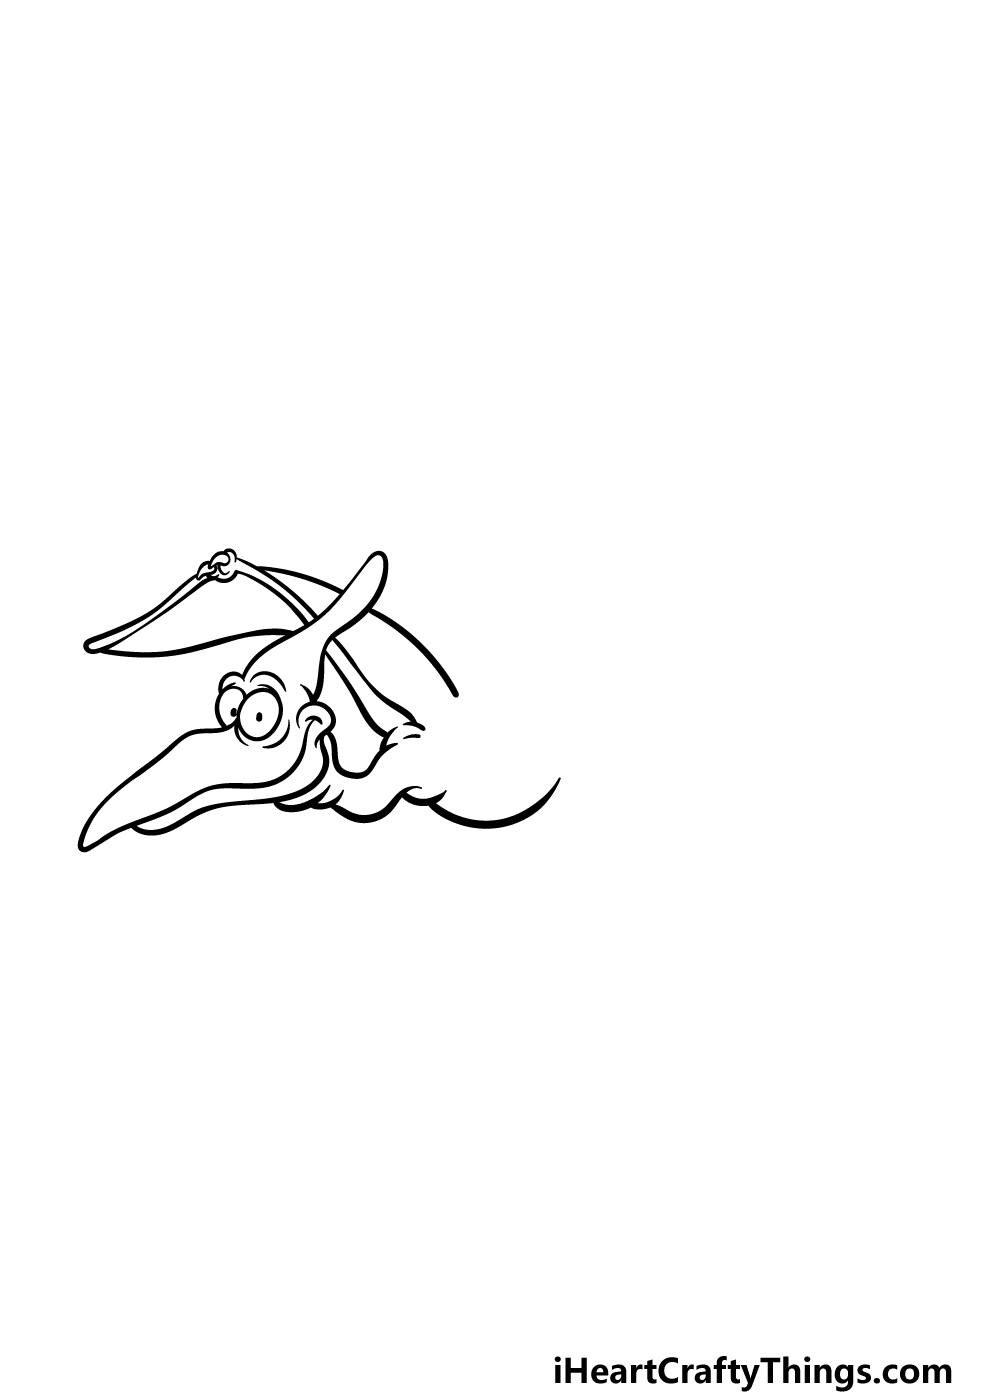 Pterodactyl drawing